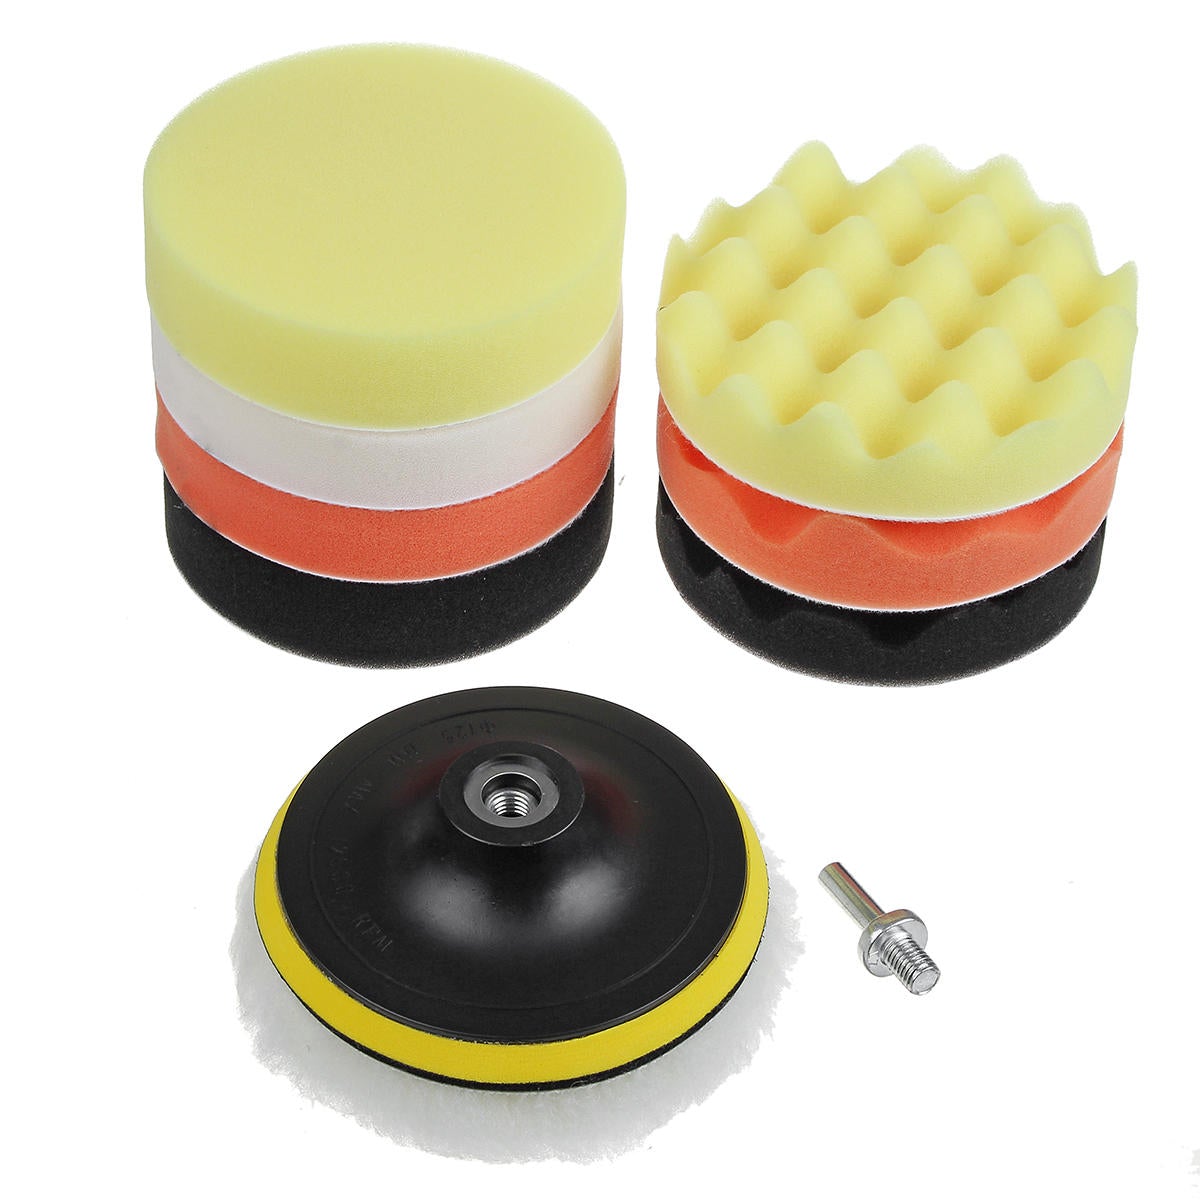 10pcs 3/4/5/6/7 Inch Buffing Waxing Polishing Sponge Pads Kit Set for Car Polisher Drill